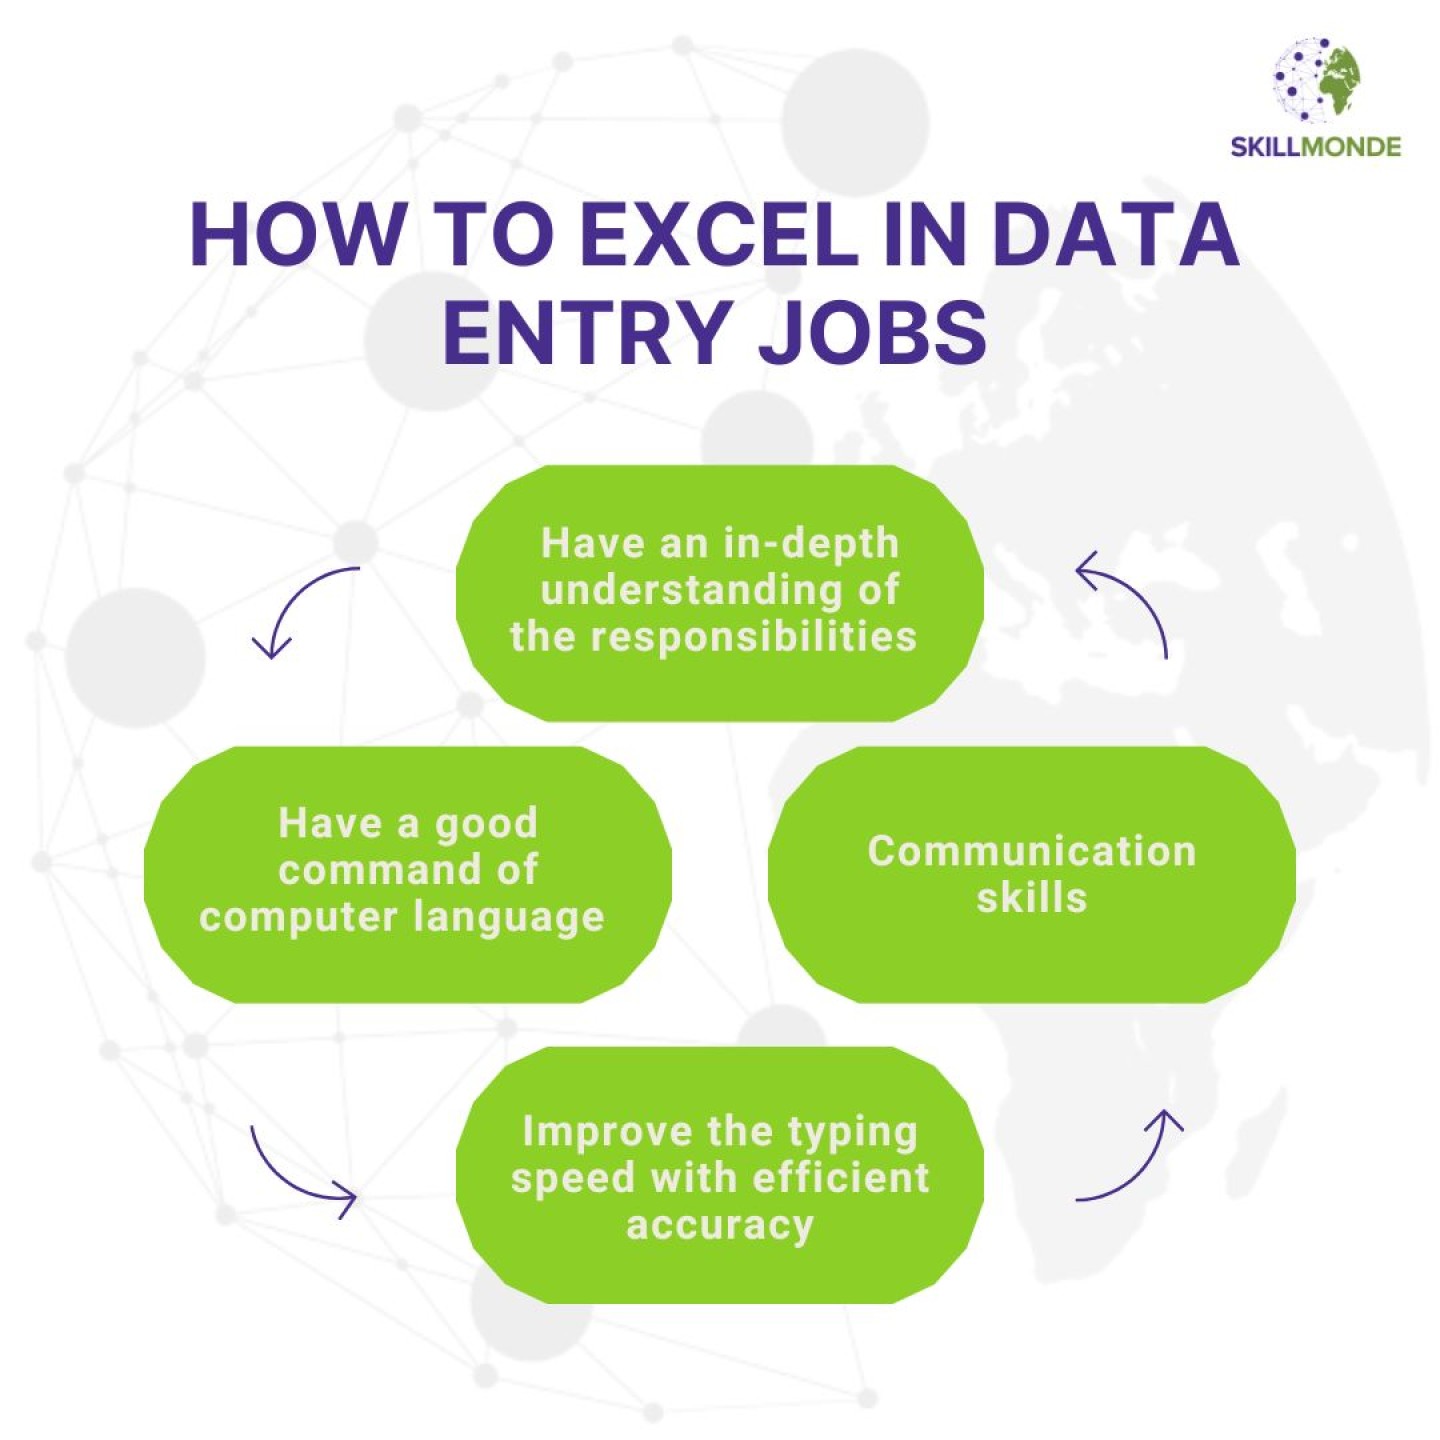 data entry jobs - skillmonde